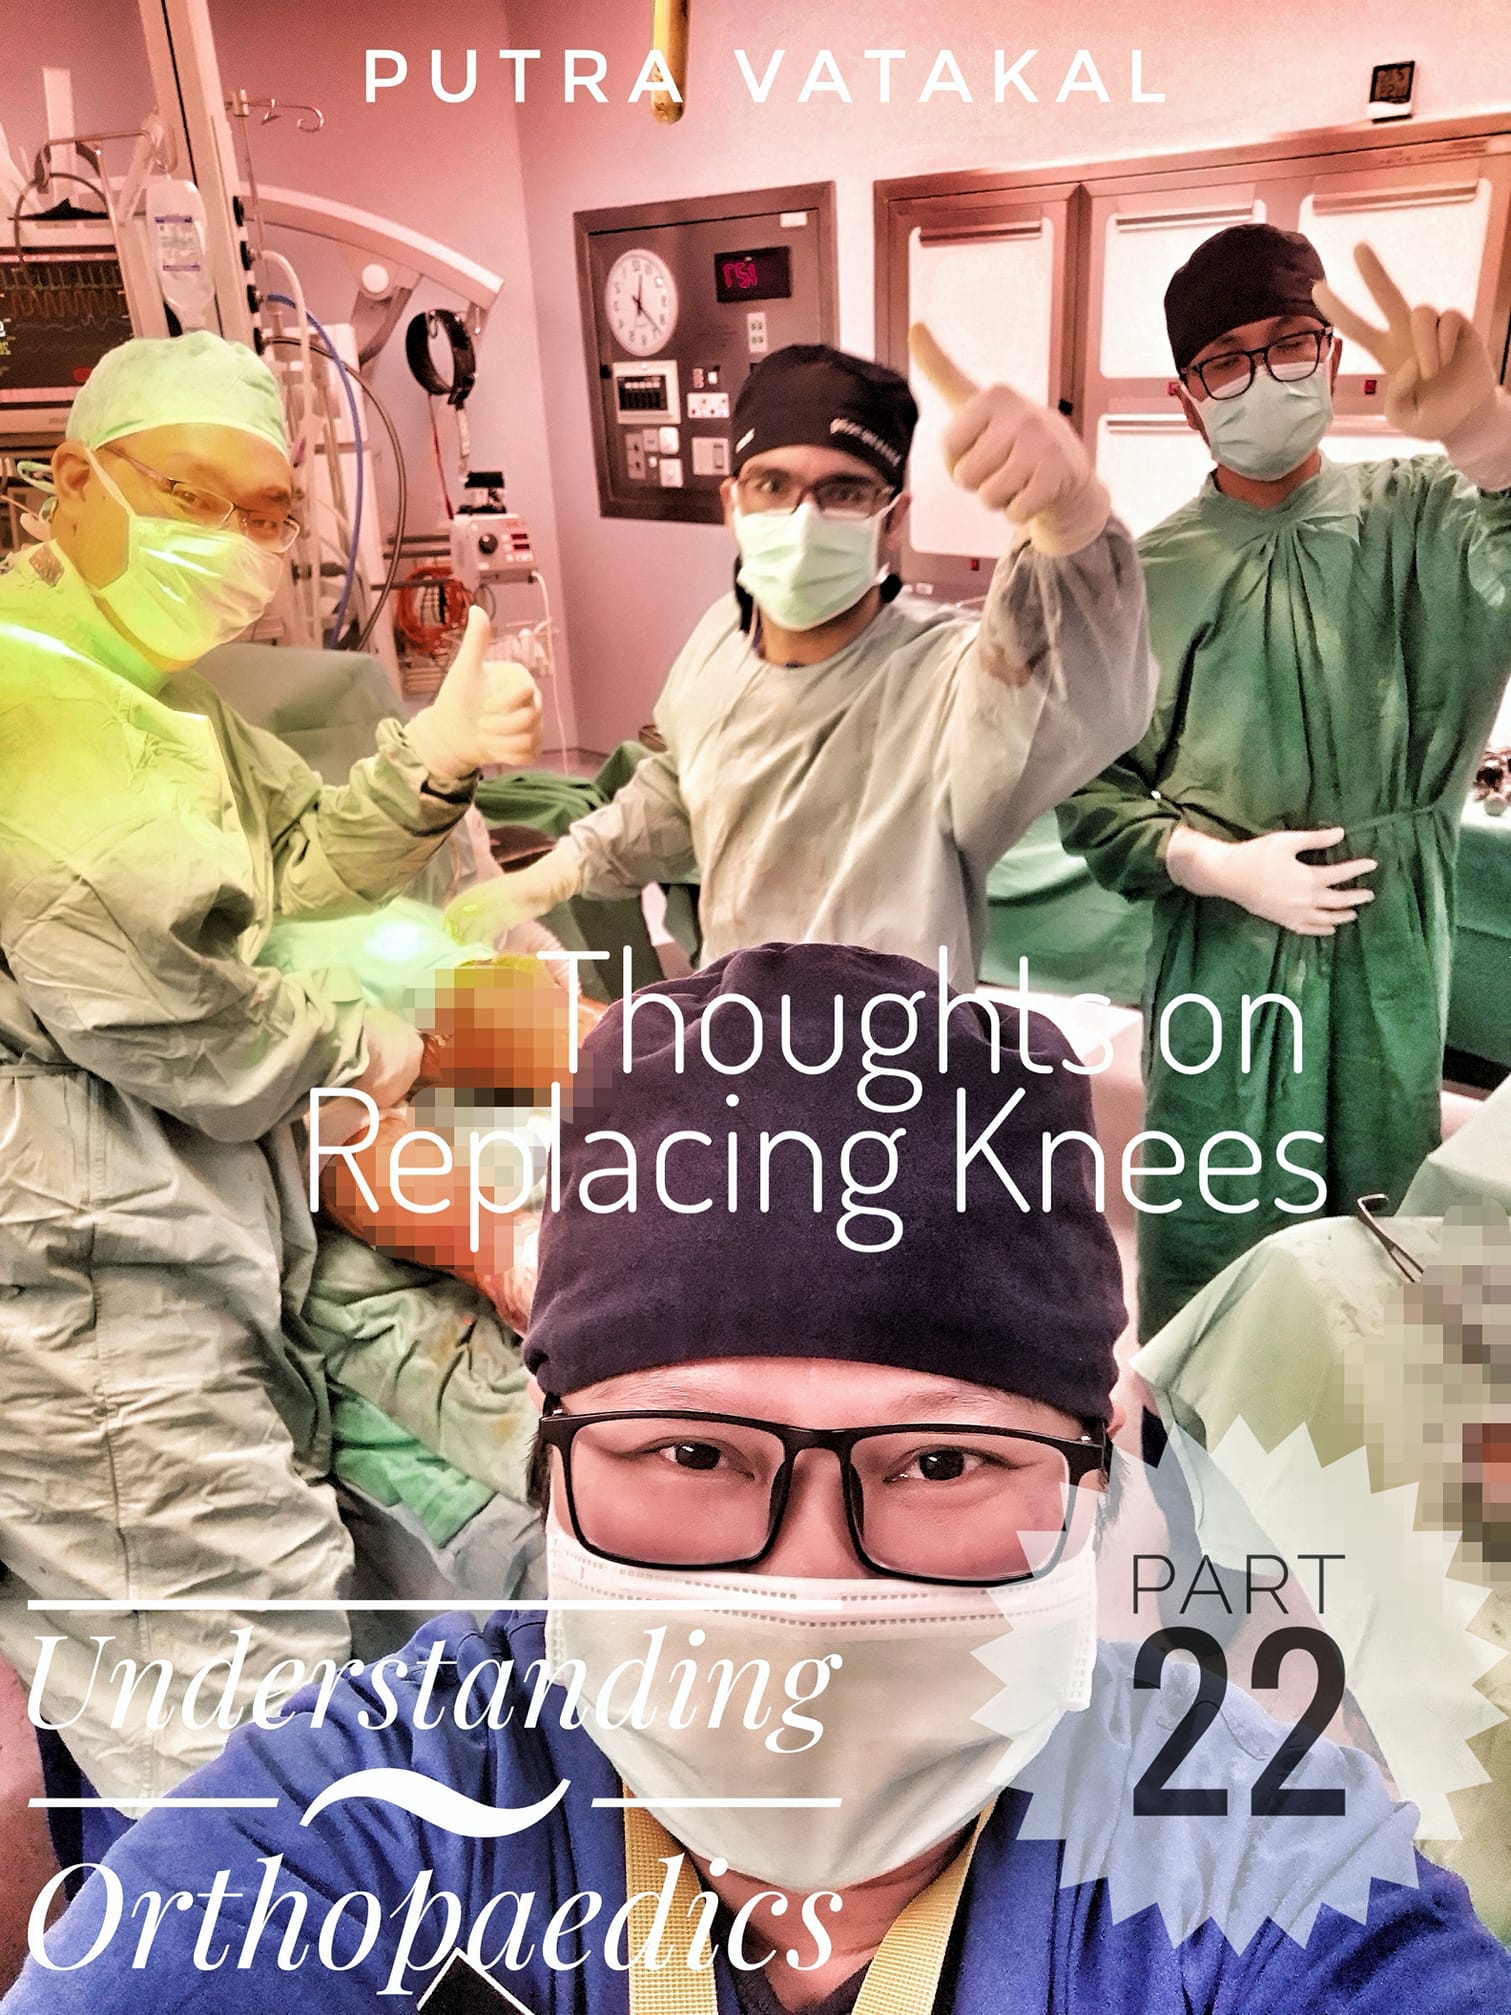 dr putra vatakal, orthopaedic surgery, kuala lumpur, selangor, malaysia, knee replacement, knee arthritis, total knee replacement, quill orthopaedic